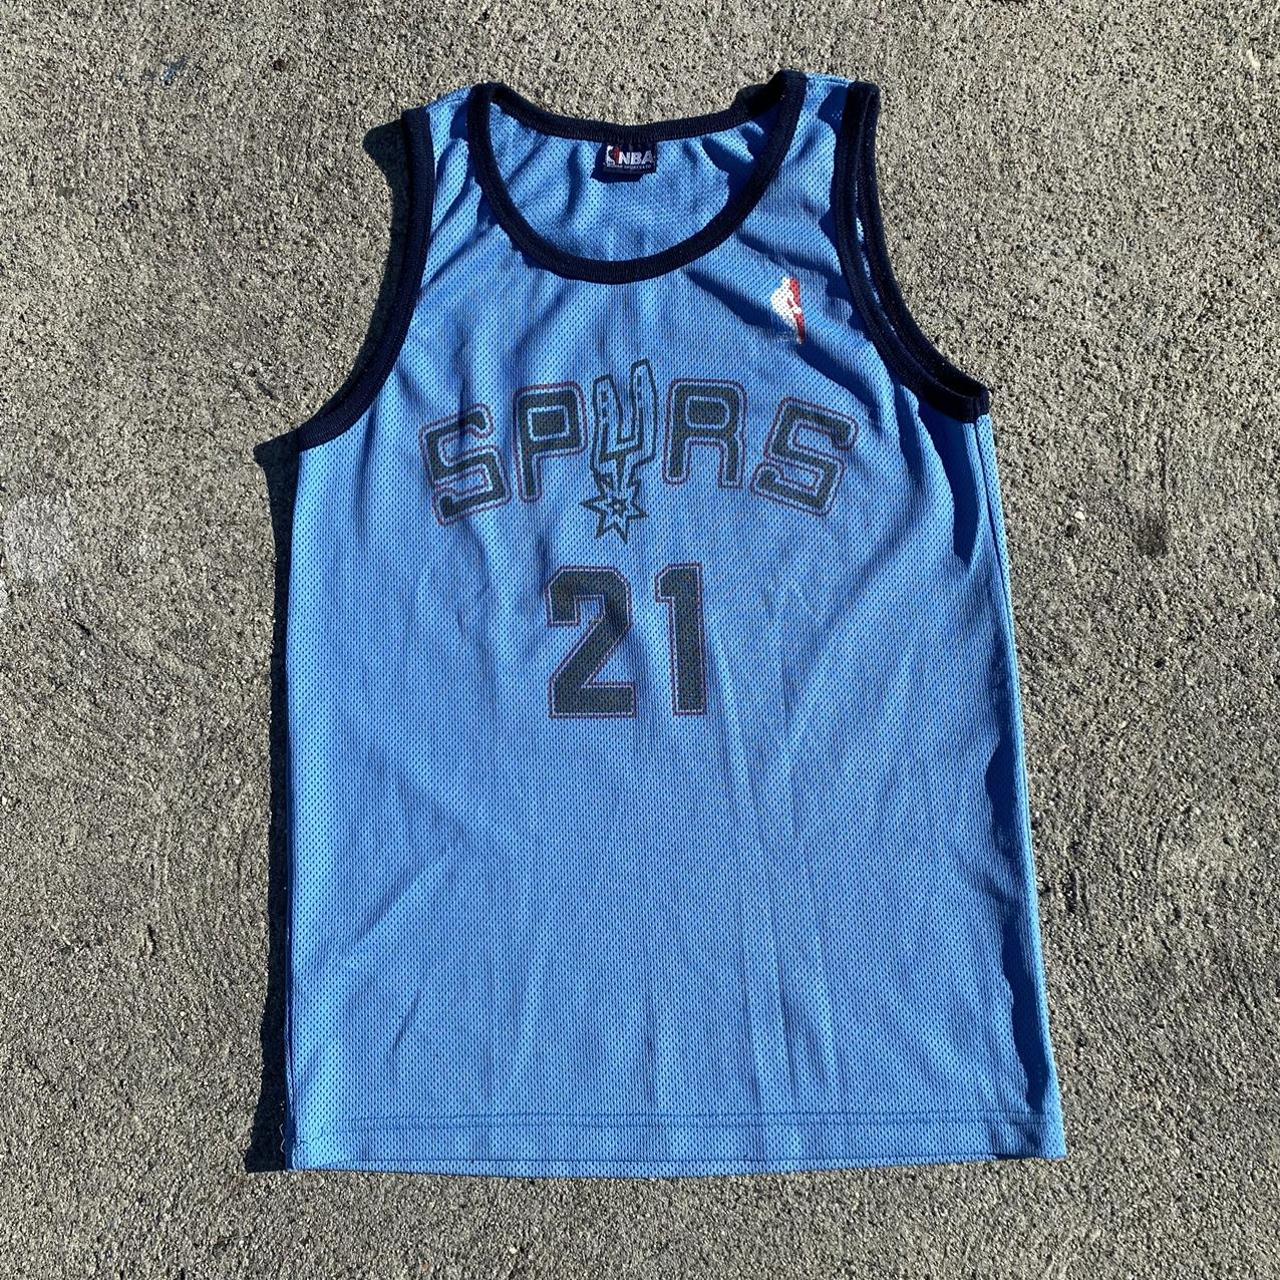 San Antonio Spurs Blue NBA Jerseys for sale